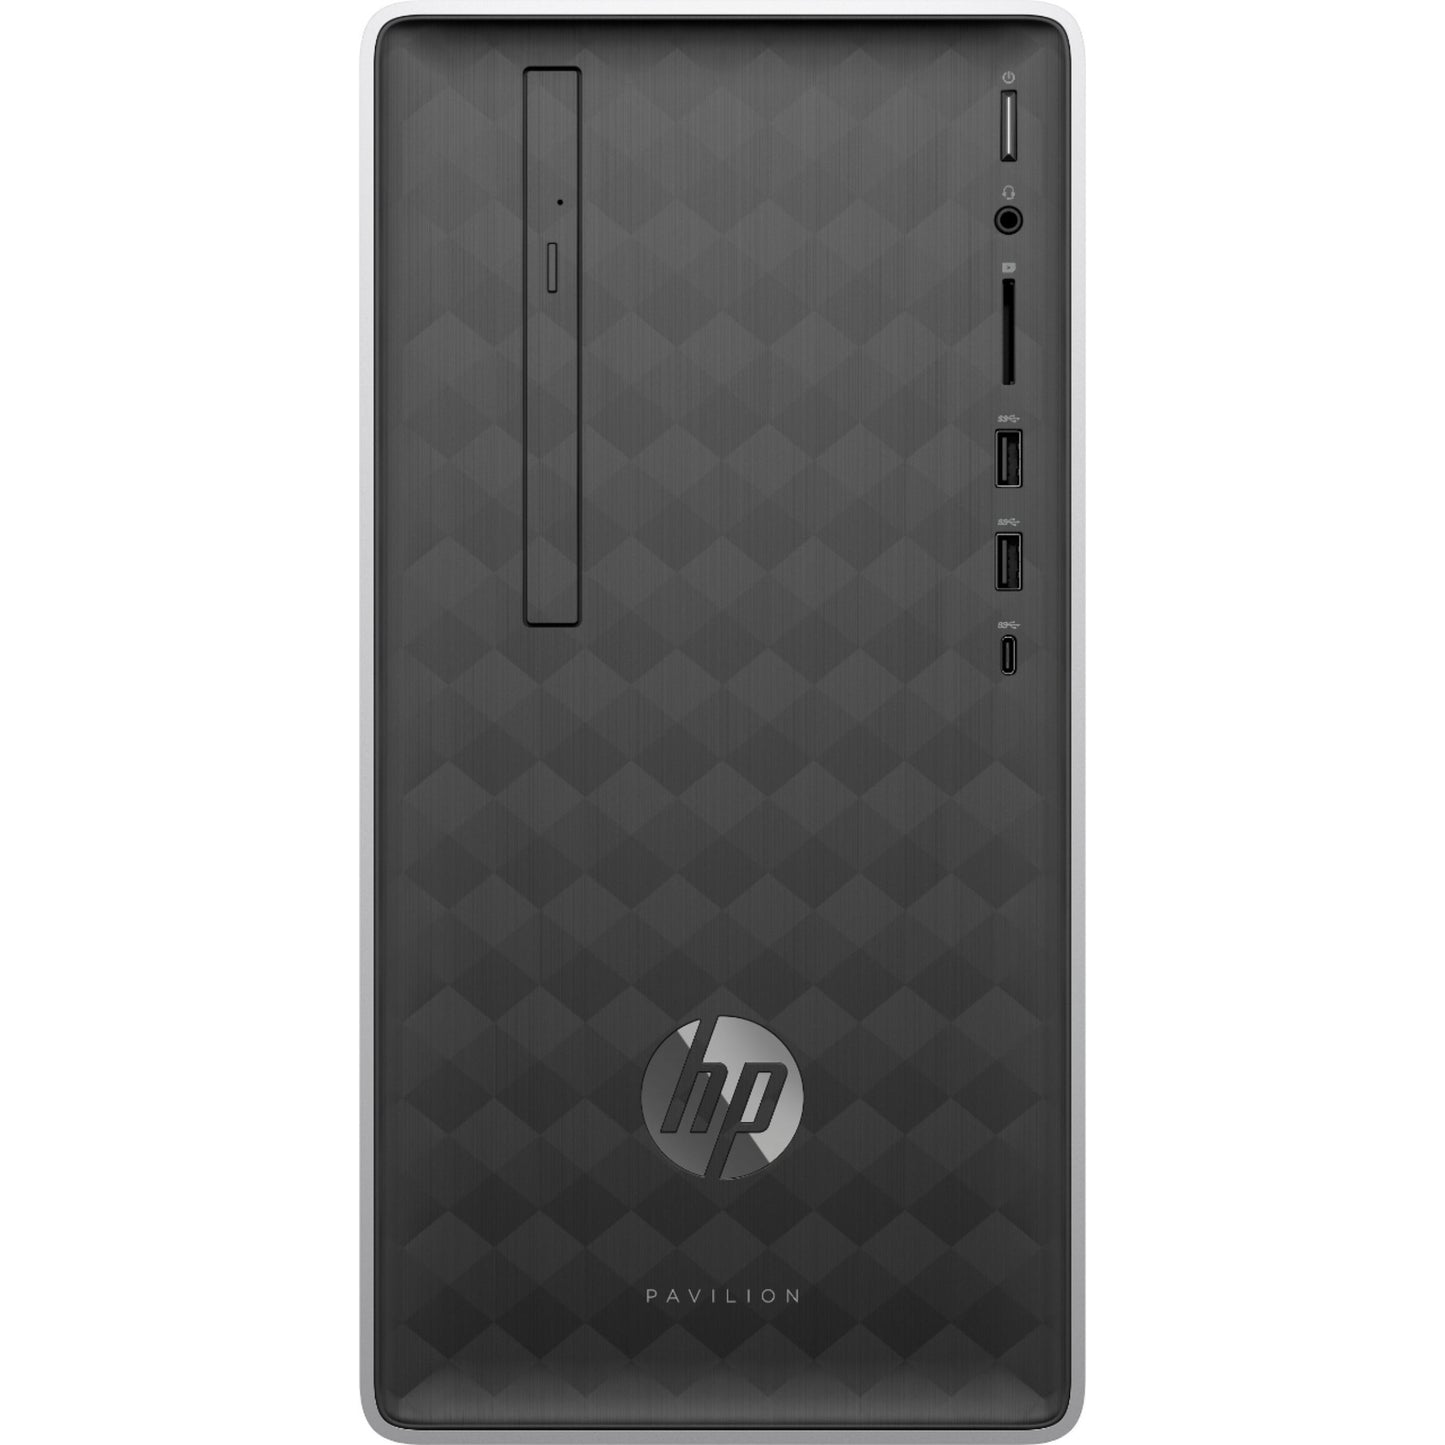 HP Pavilion Desktop 590-p0103wb AMD Ryzen 3 - Rekes Sales